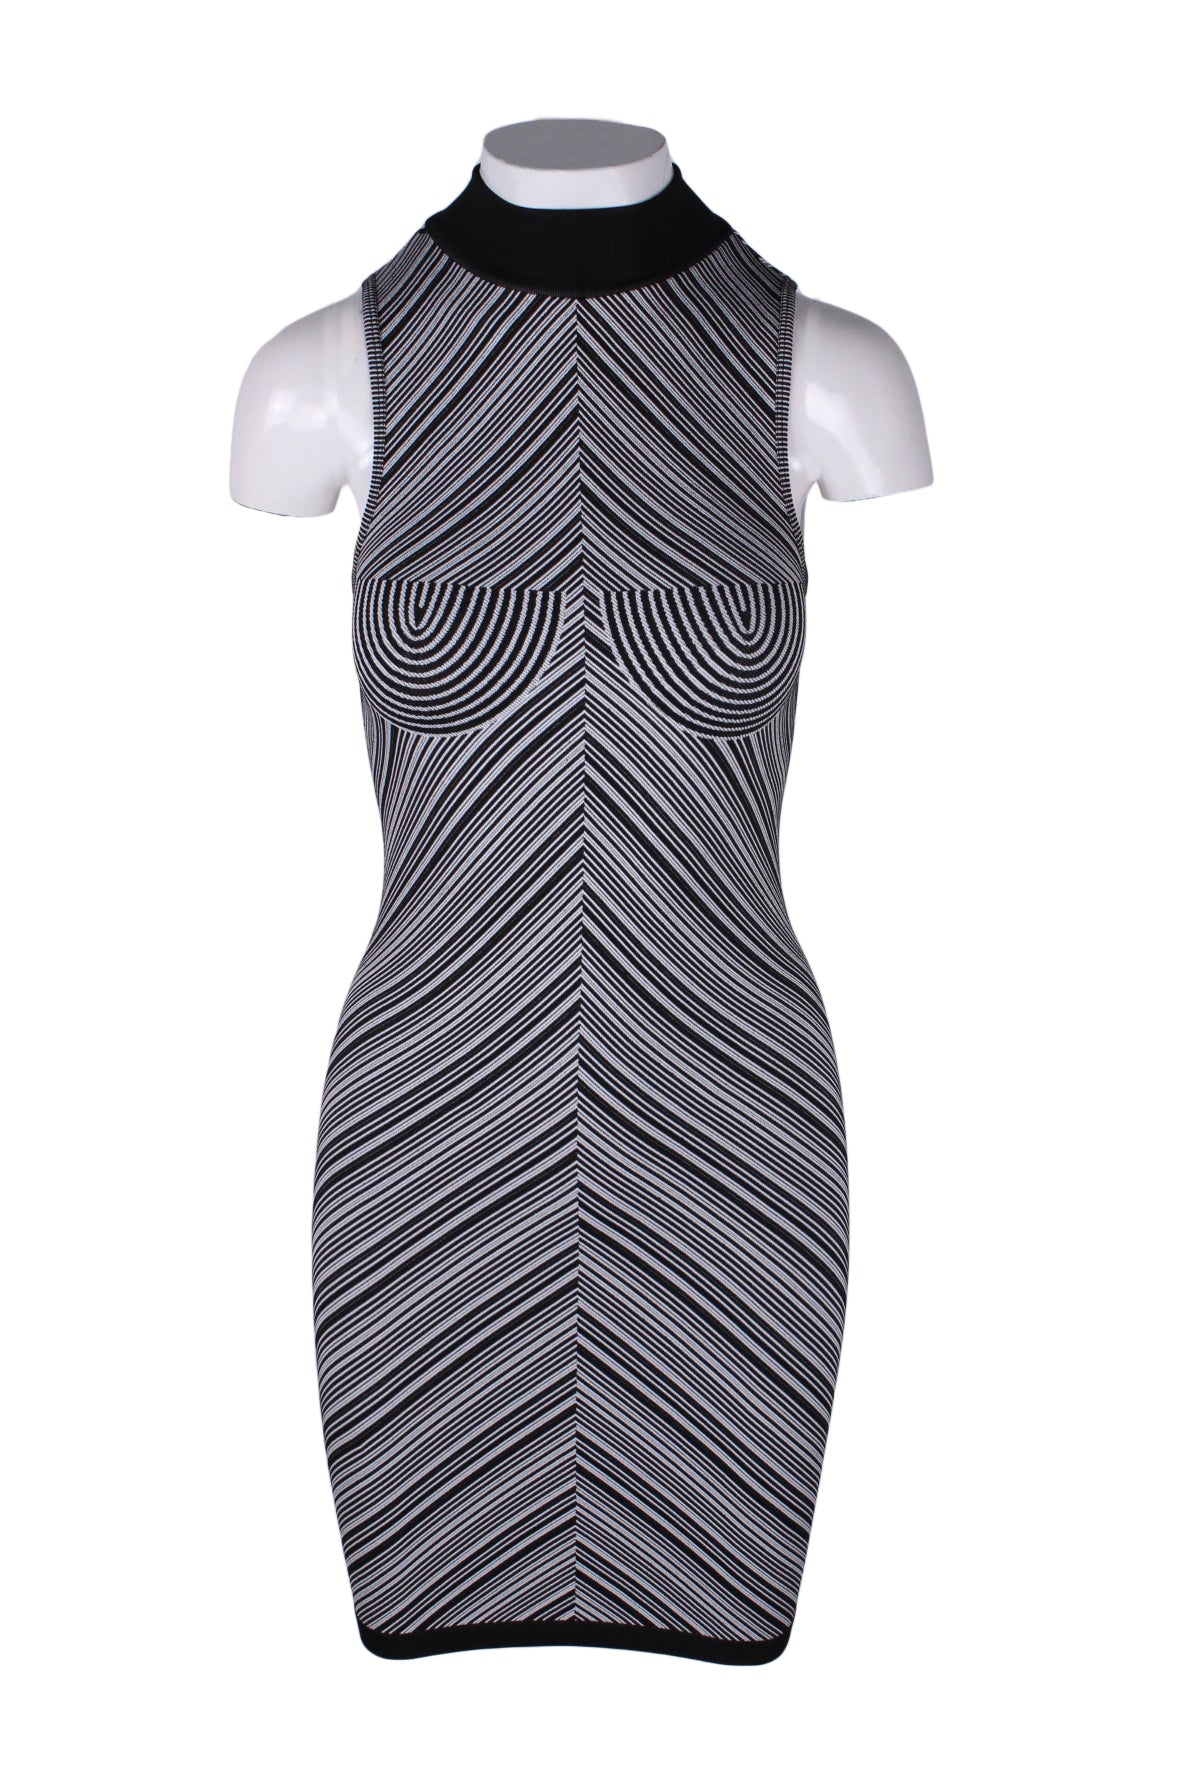 black and white body contour printed sleeveless dress. 